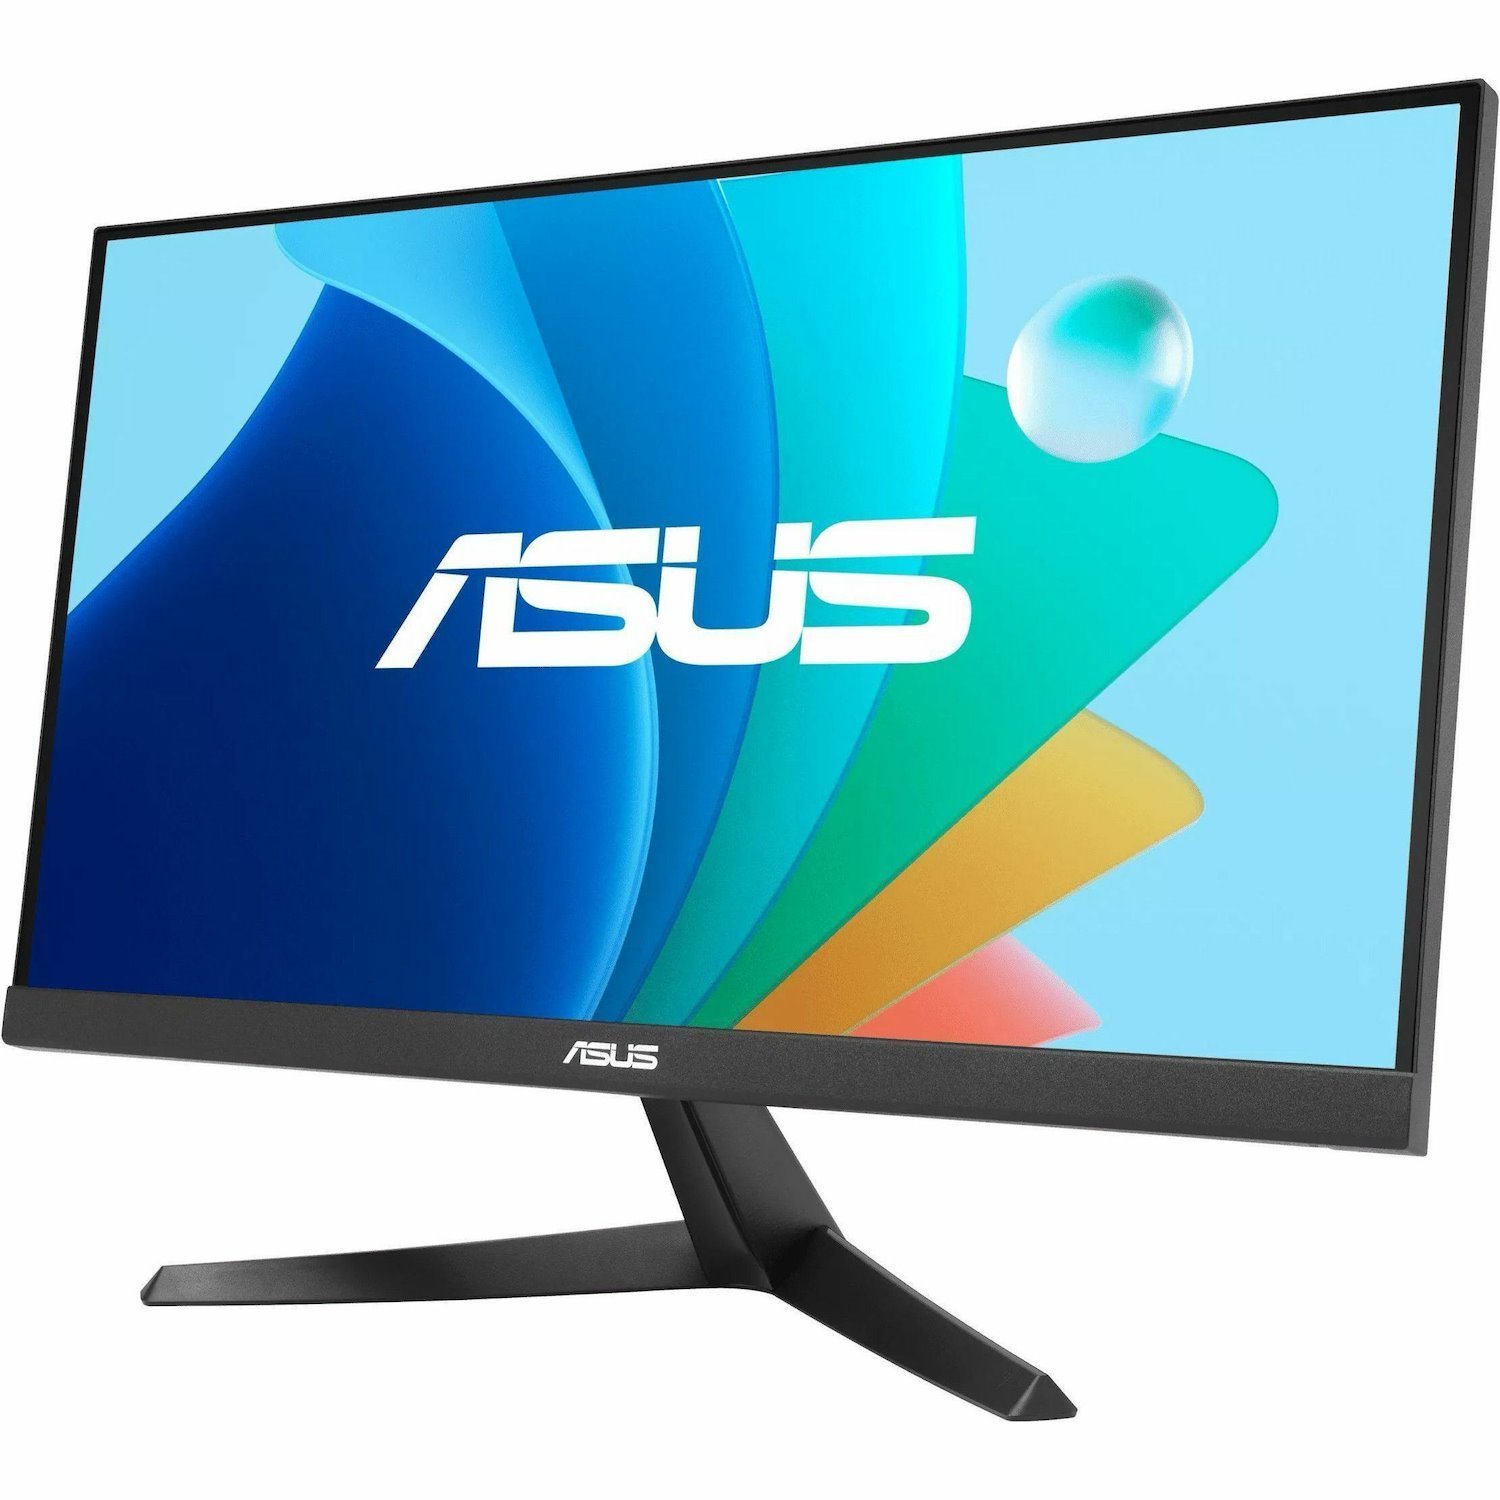 Asus VY229HF 22" Class Full HD Gaming LED Monitor - 16:9 - Black